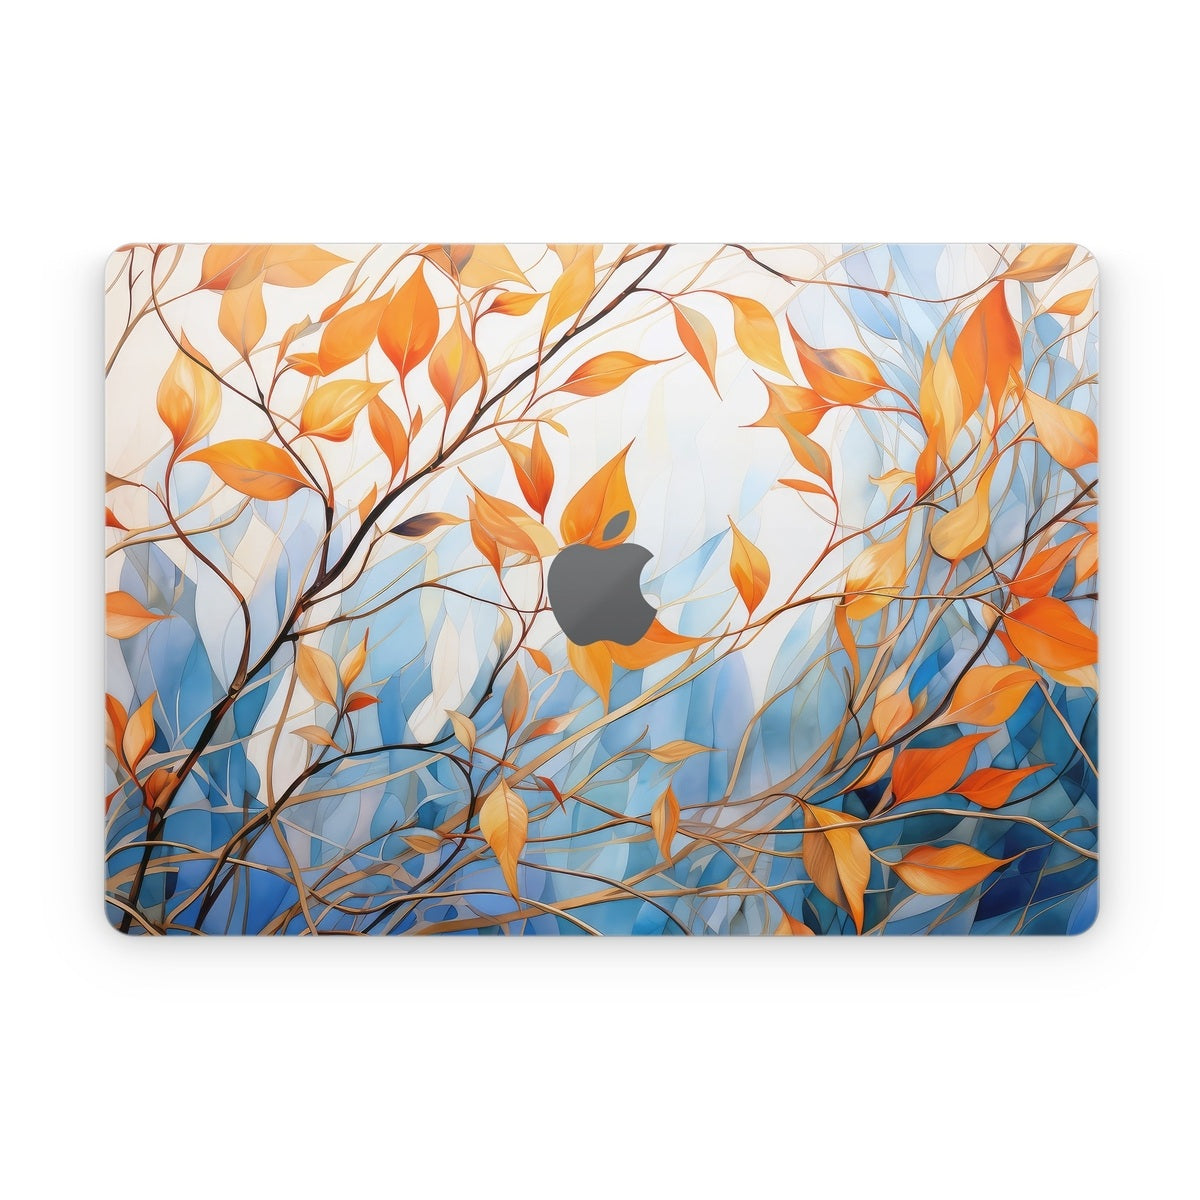 Blustery Day - Apple MacBook Skin